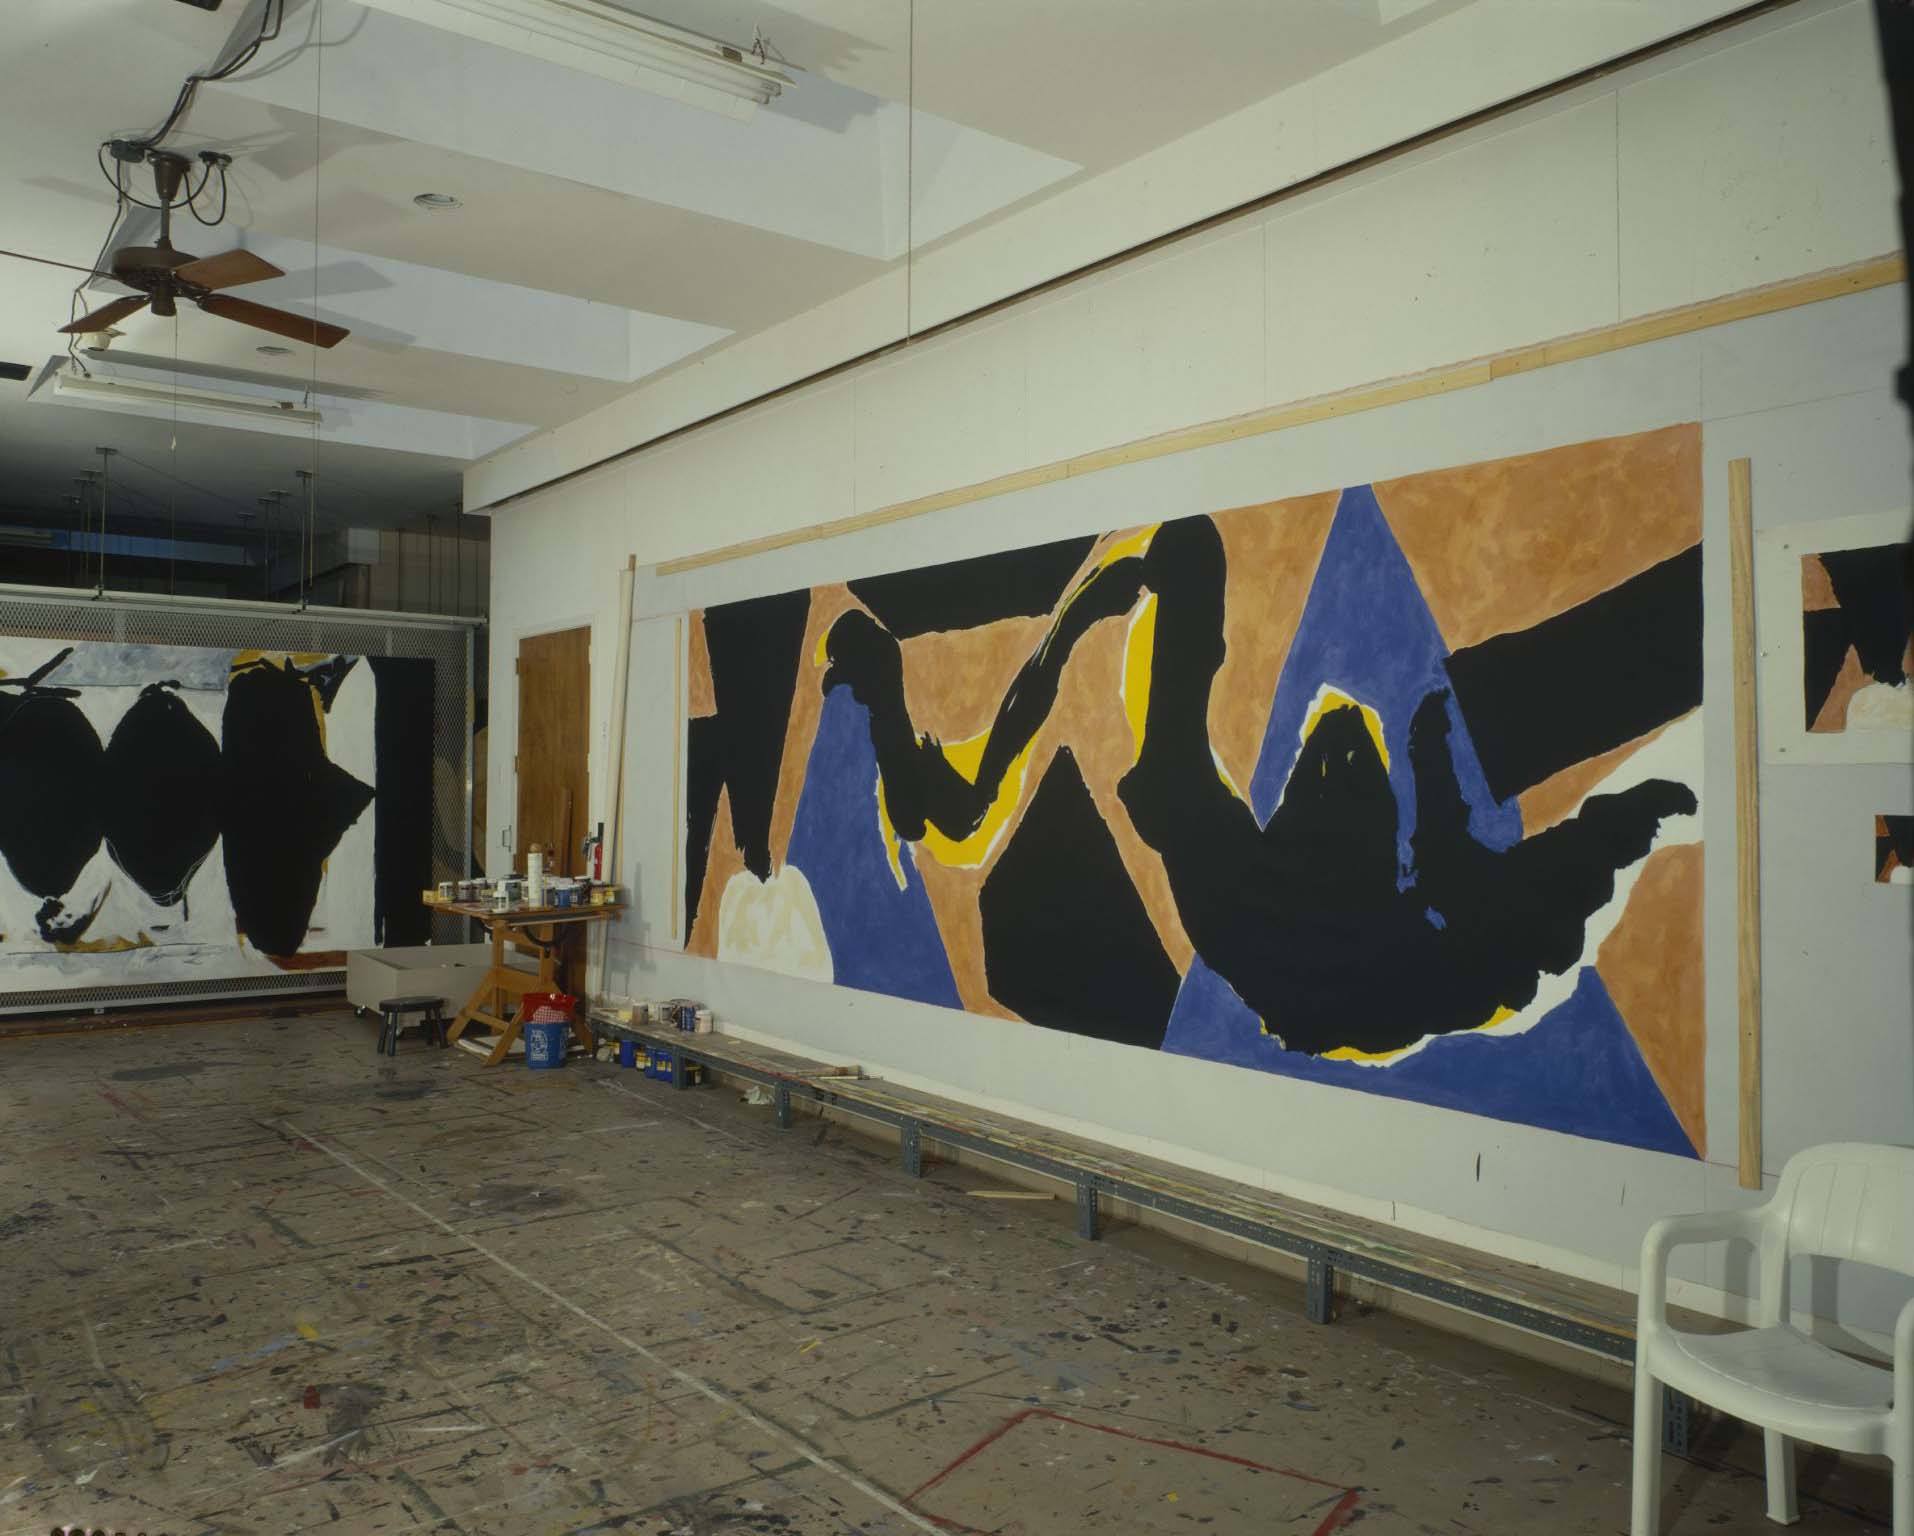 Motherwell’s Greenwich studio with Arabesque in progress, October 1989